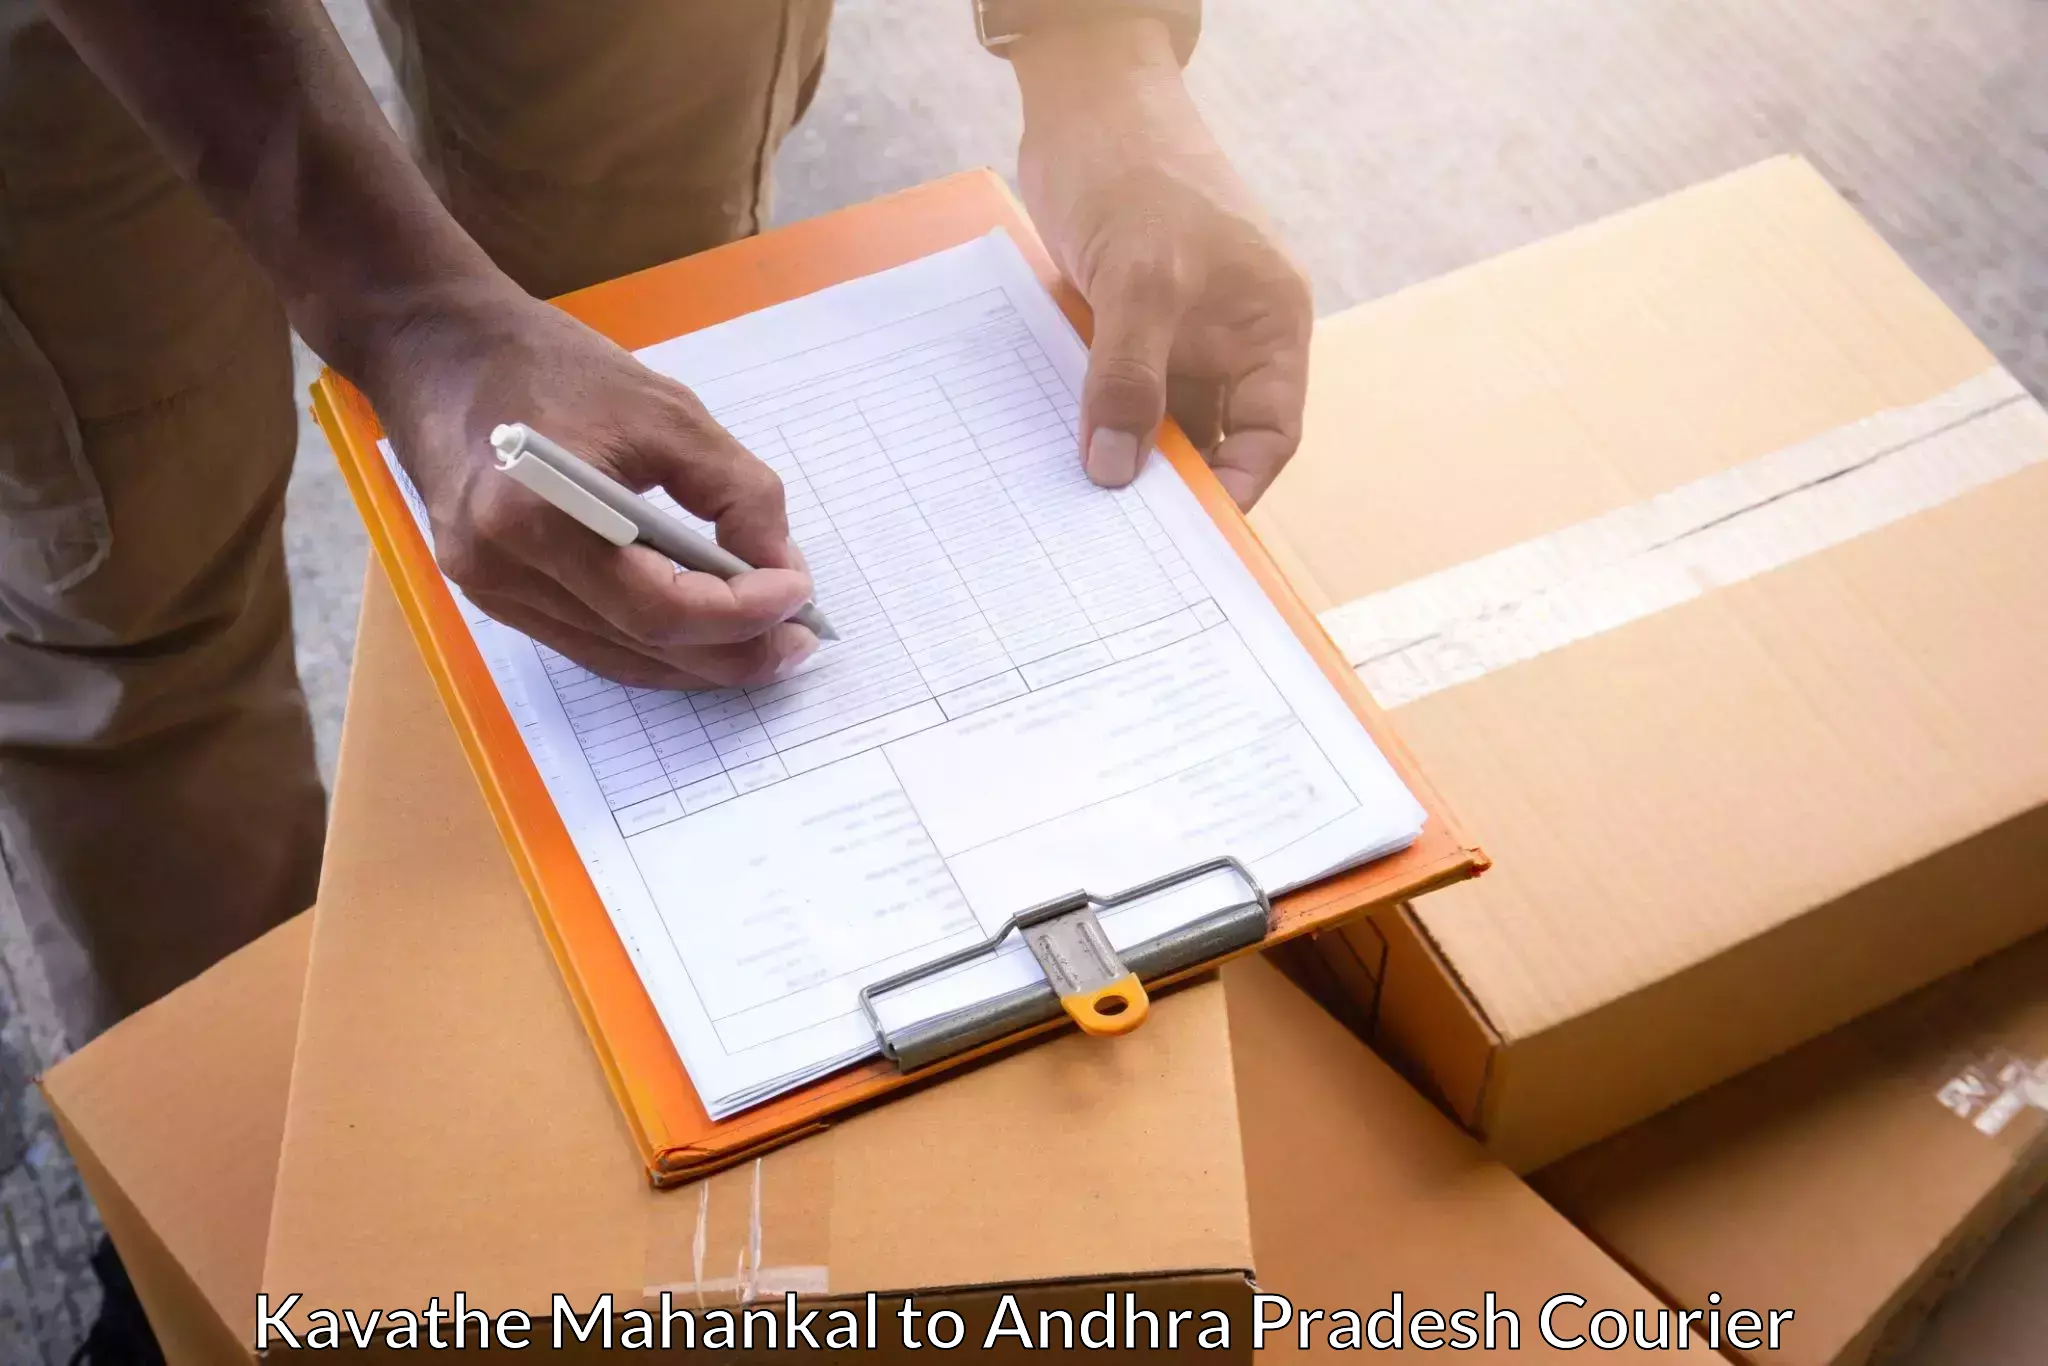 Courier service innovation Kavathe Mahankal to Bikkavolu